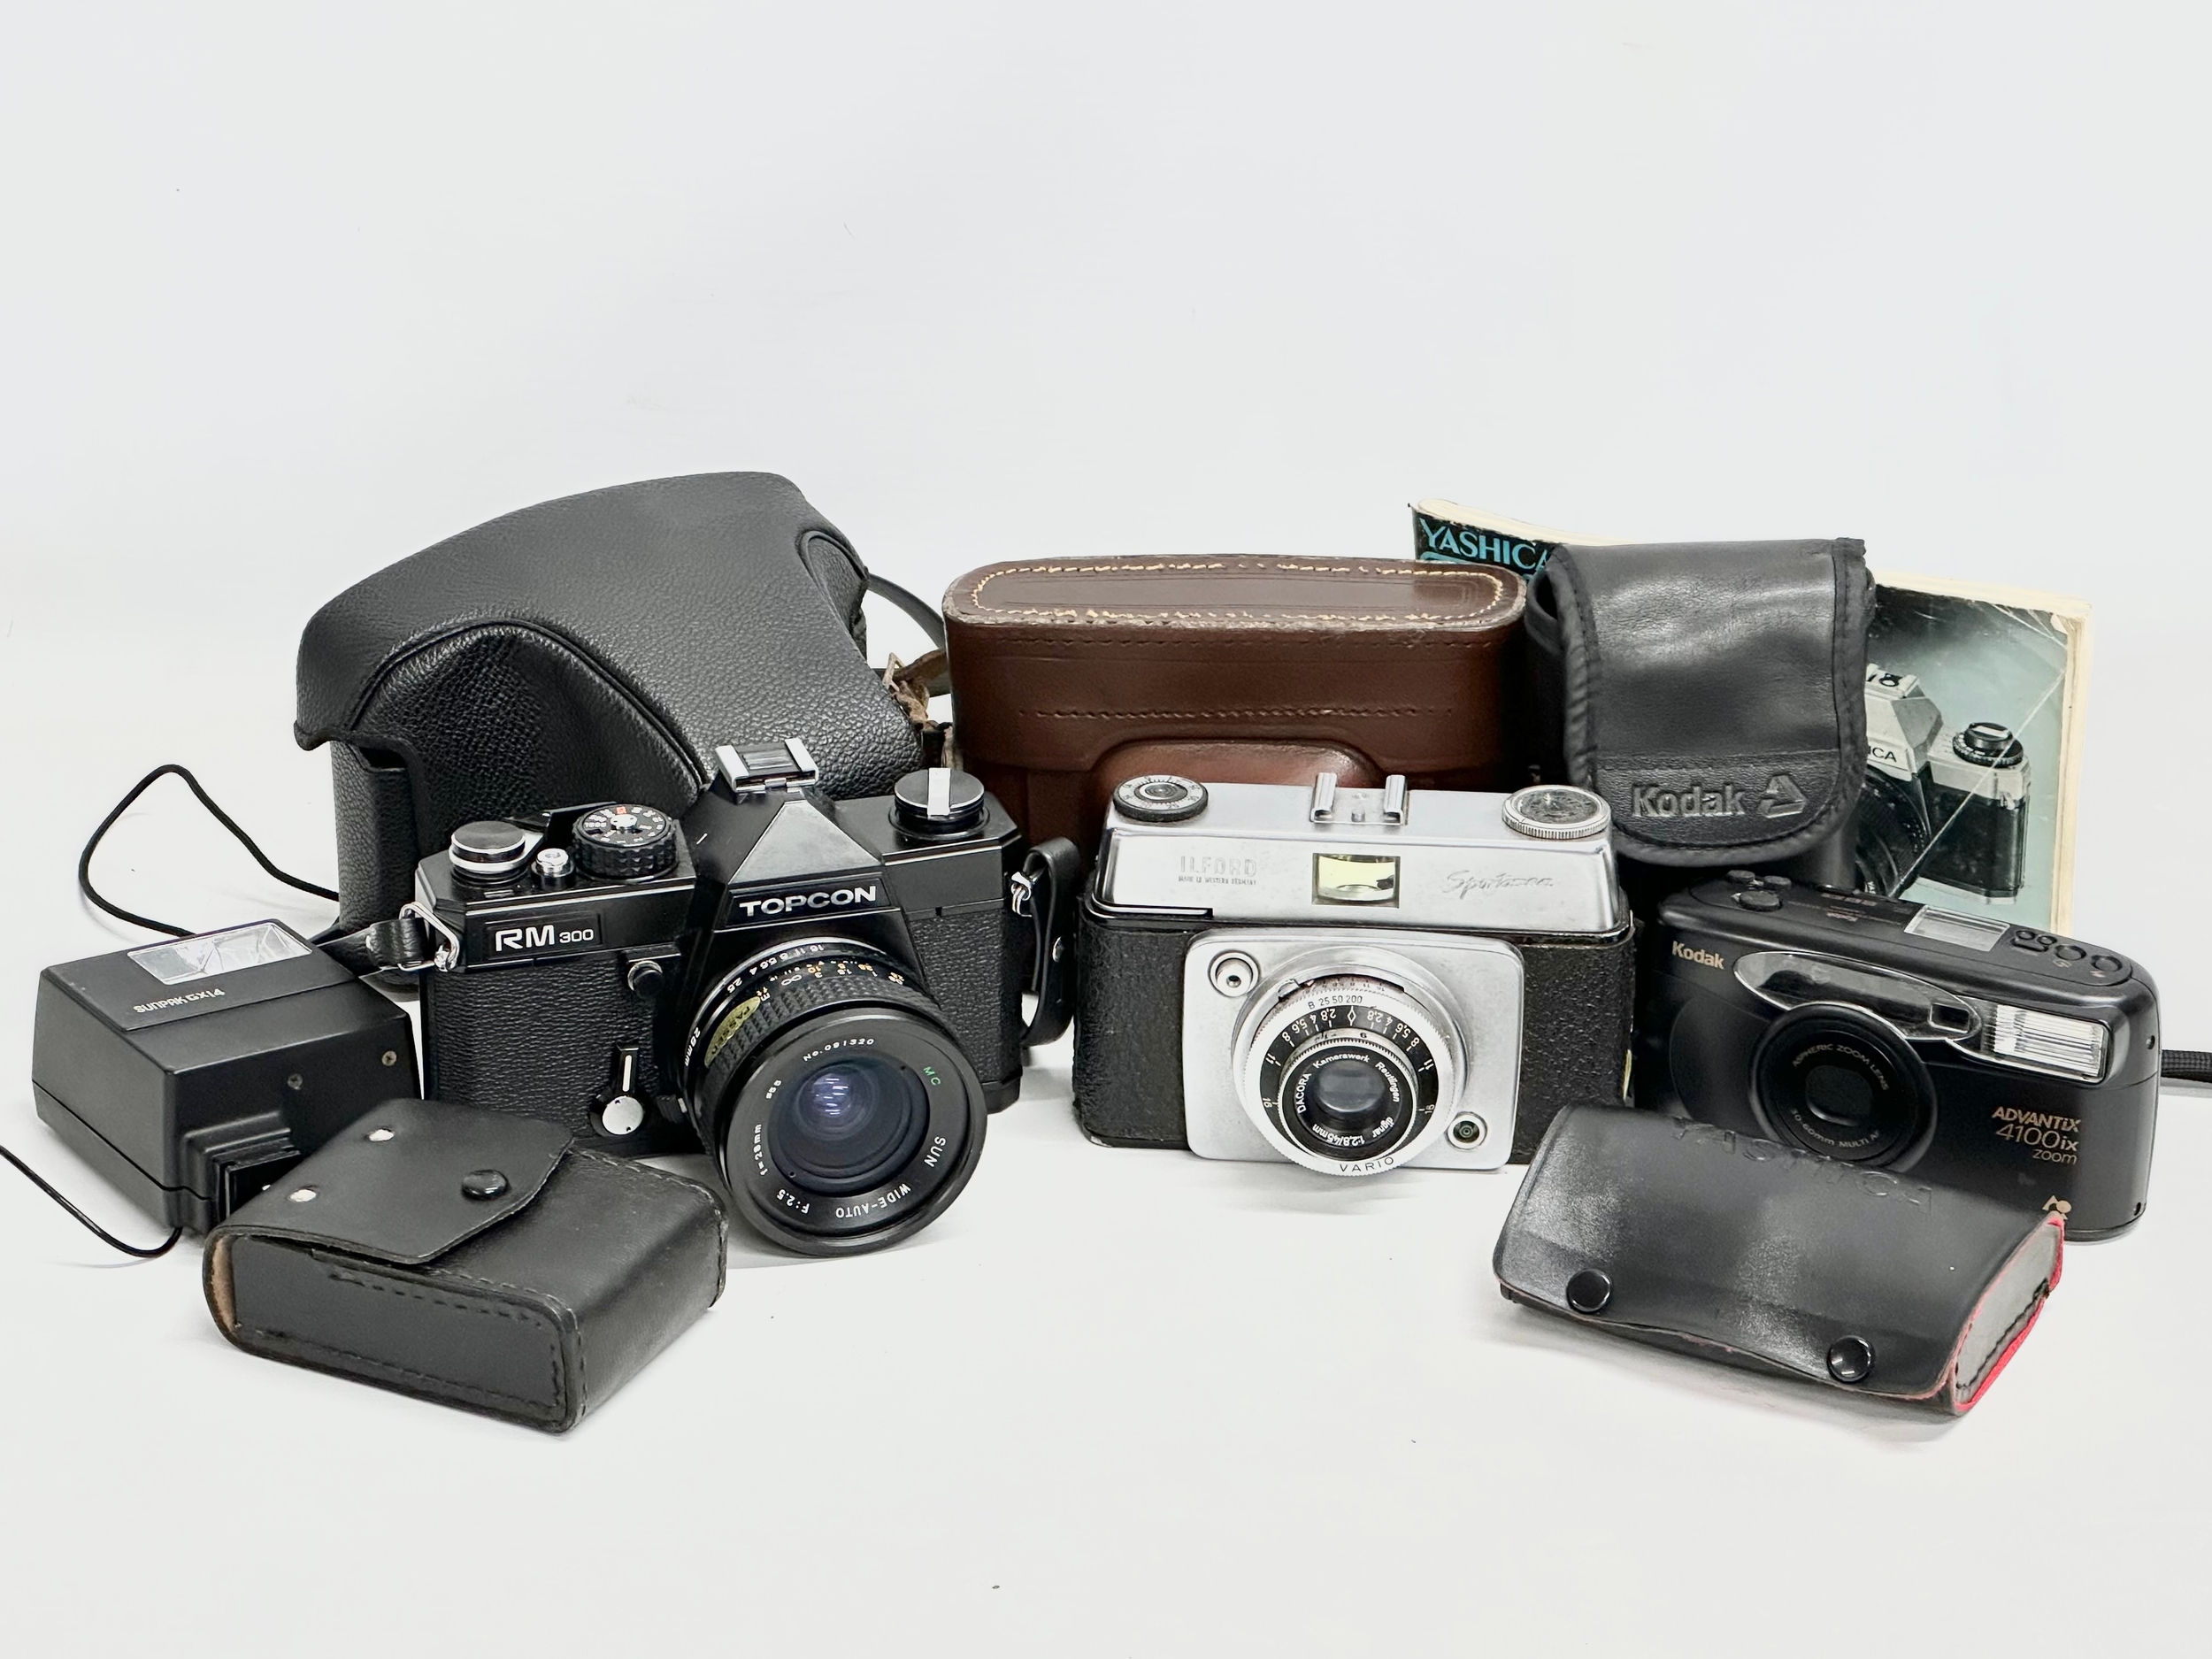 A collection of cameras. Topcon RM300 with case. Ilford Sportman camera with case. Kodak Advantix